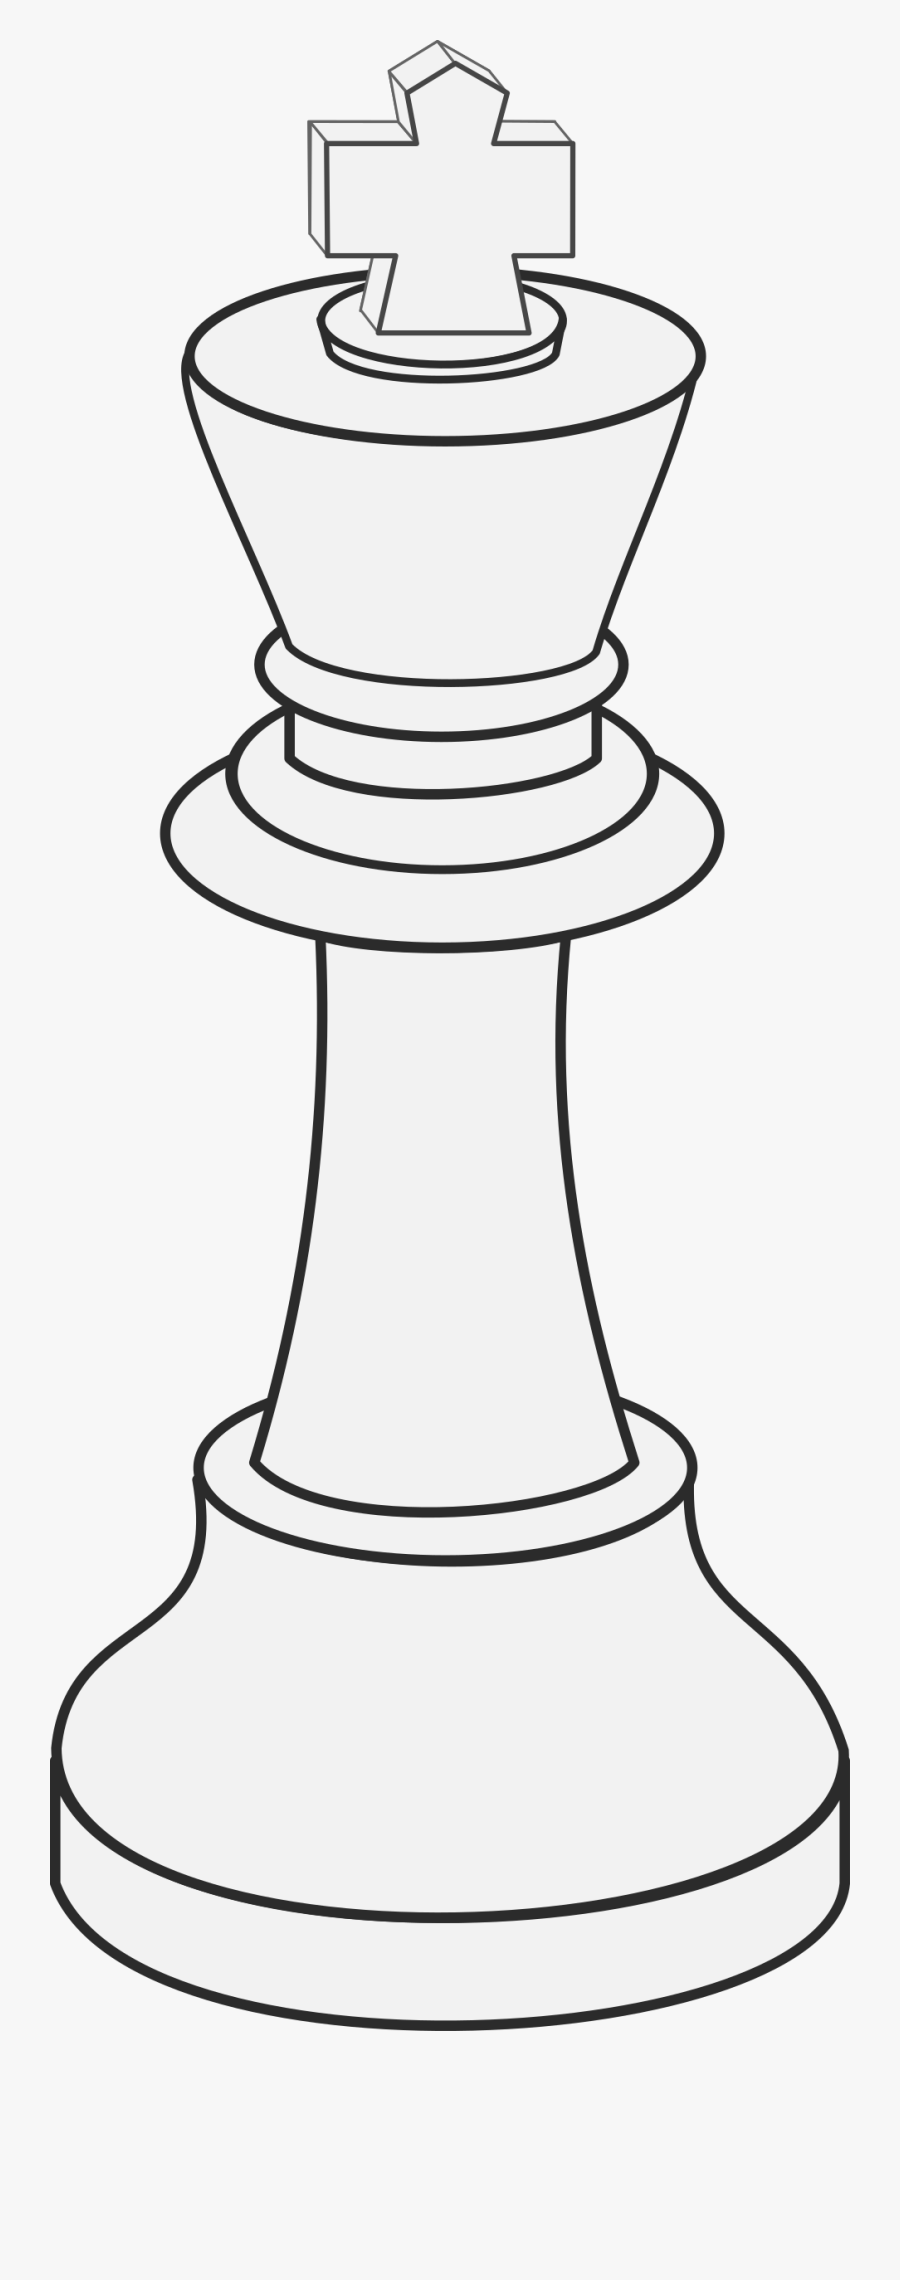 Drawing Chess Queen - Cartoon King Chess Piece, Transparent Clipart